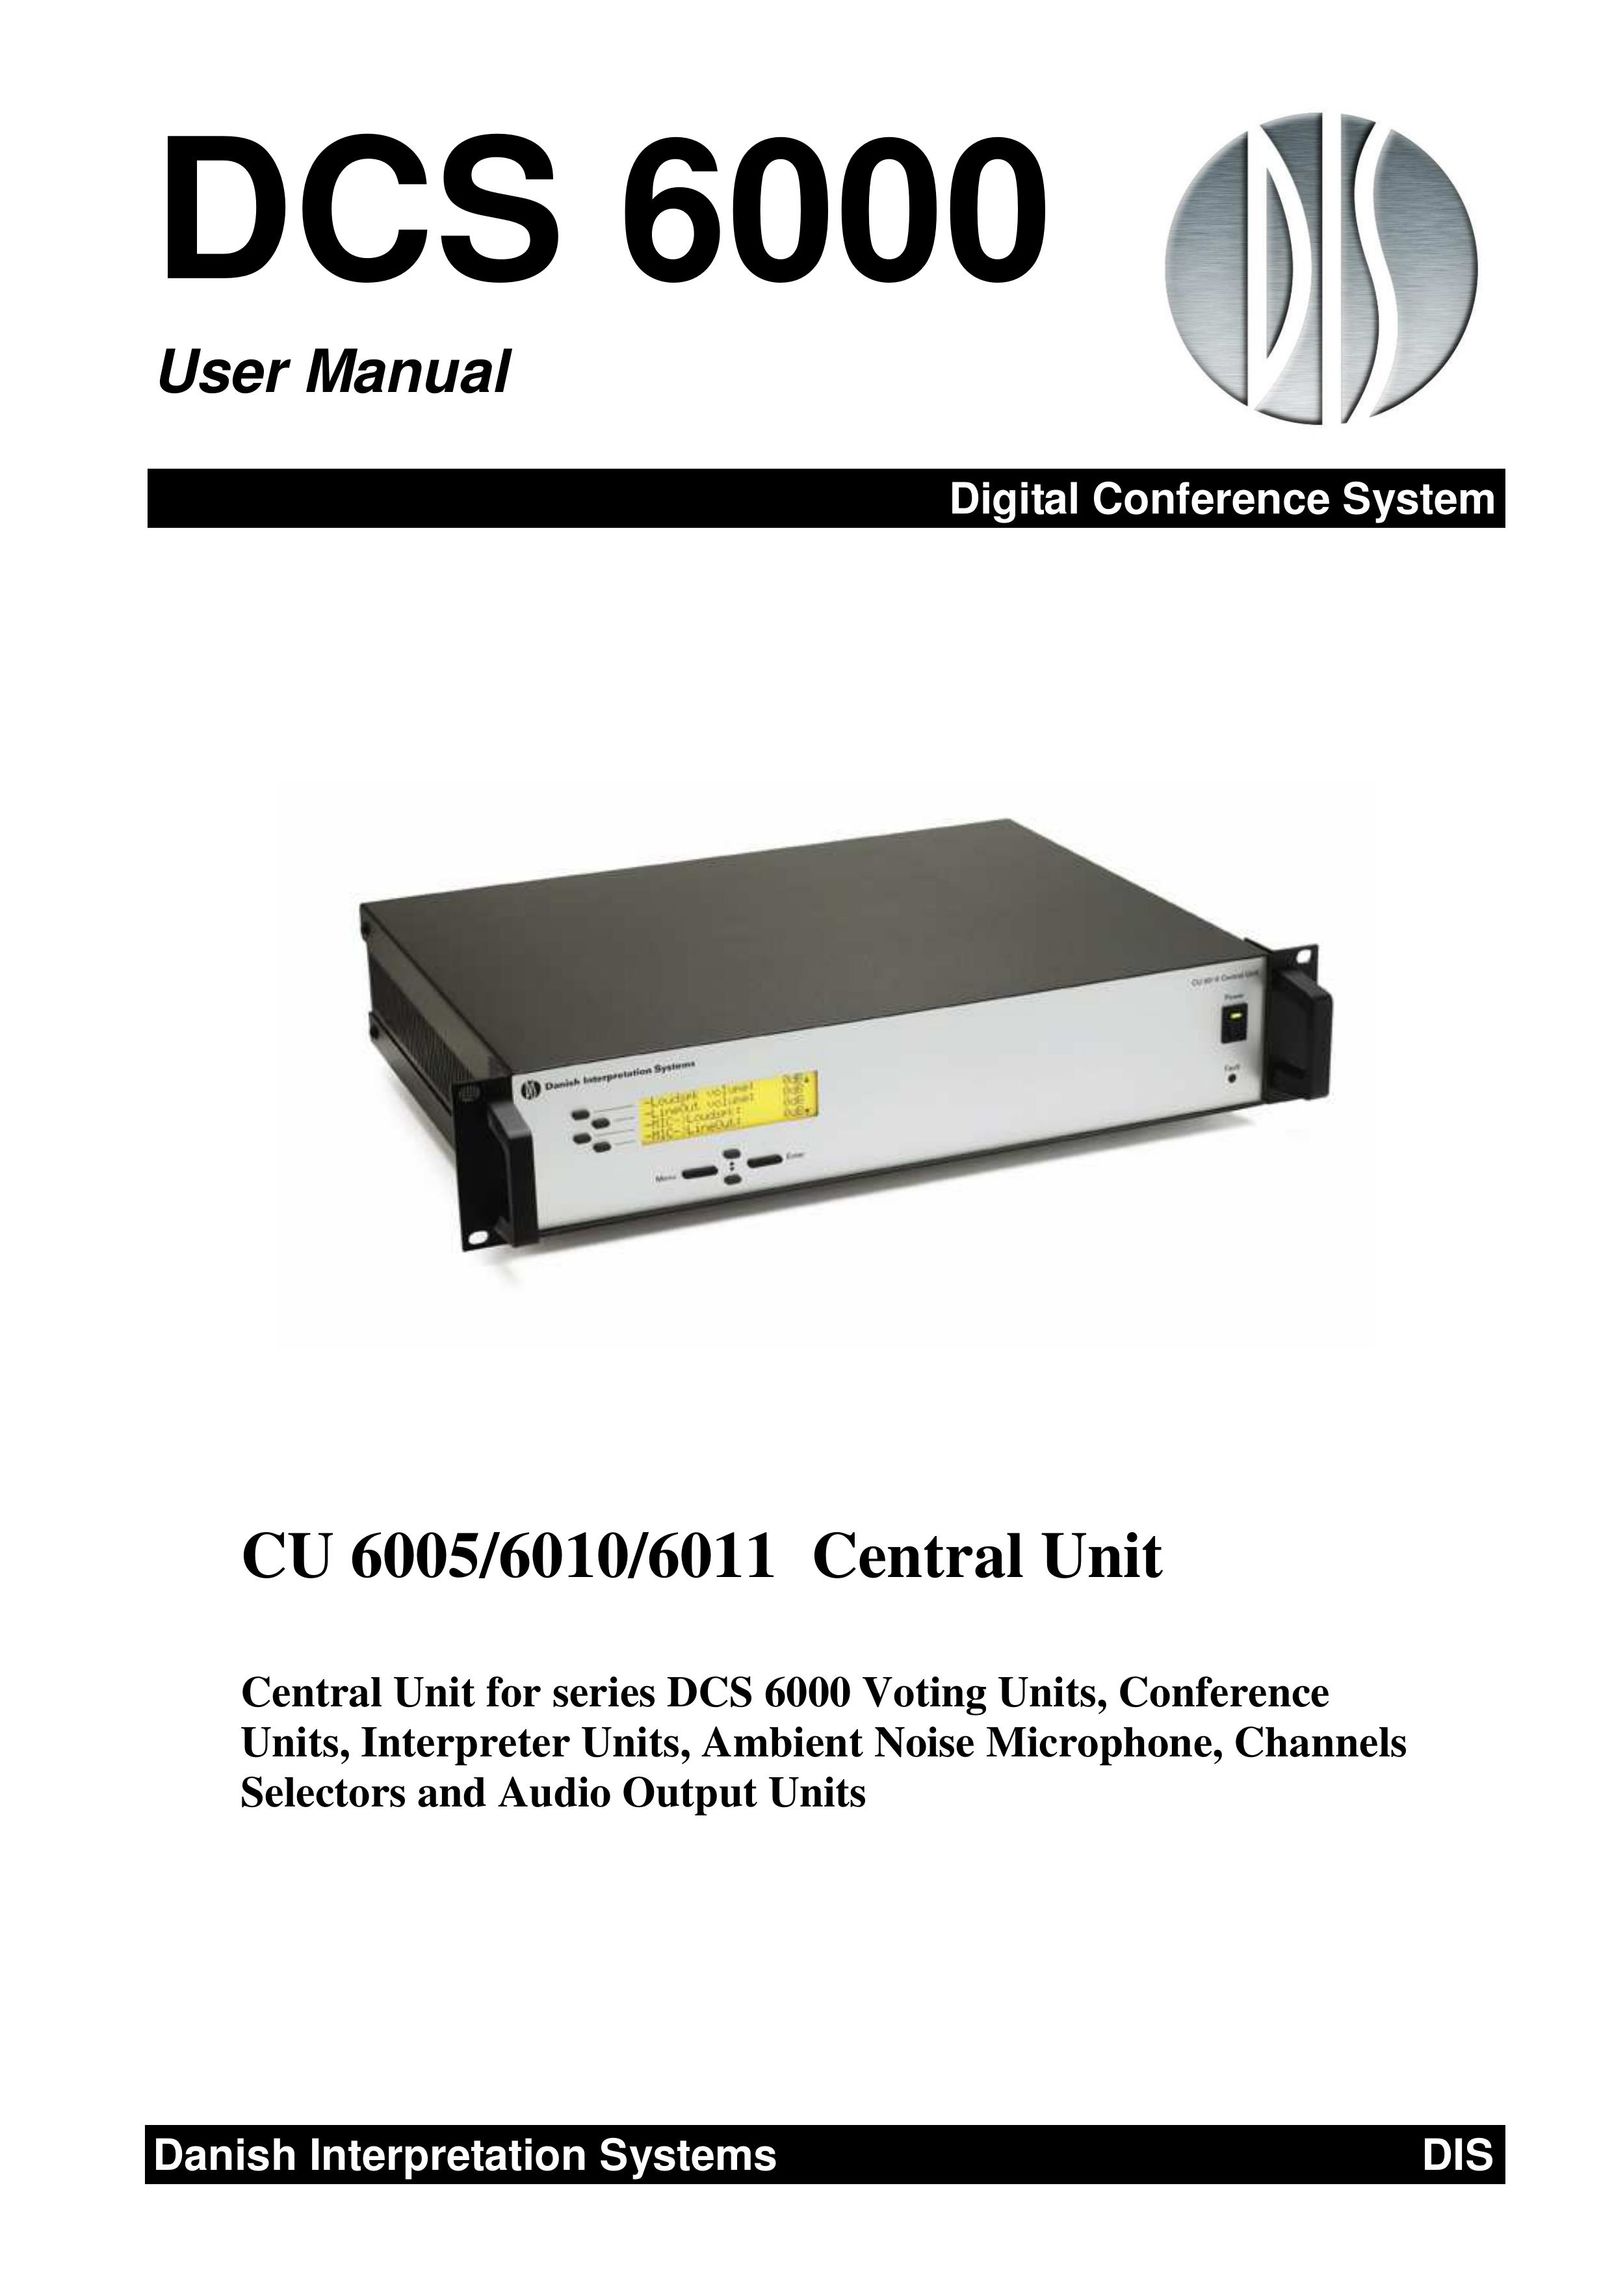 Listen Technologies CU 6011 Stereo Receiver User Manual